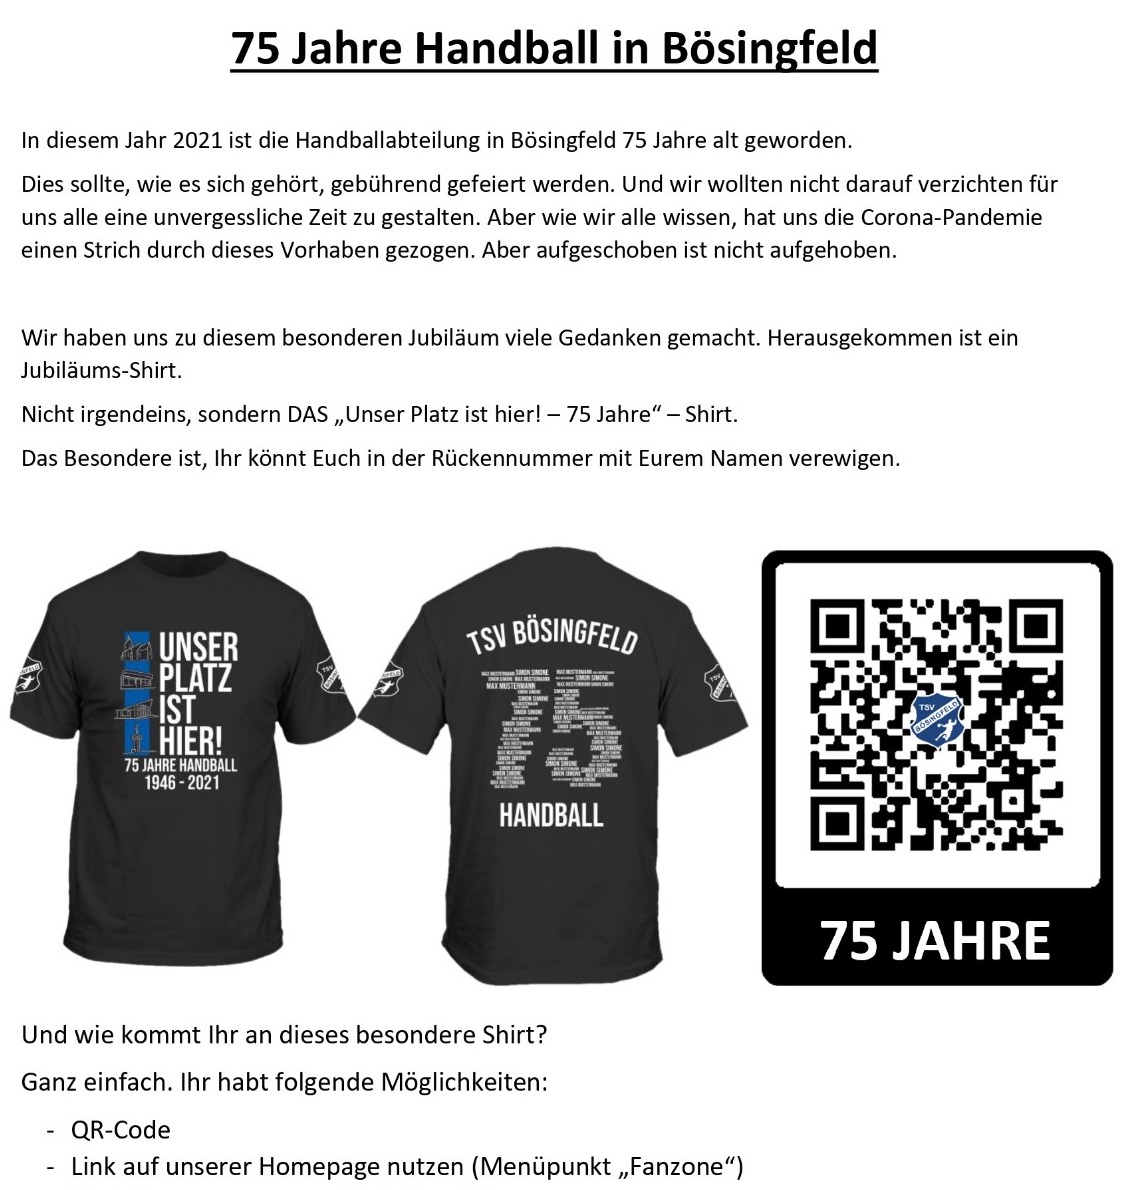 75 Jahre - Handball in Bösingfeld